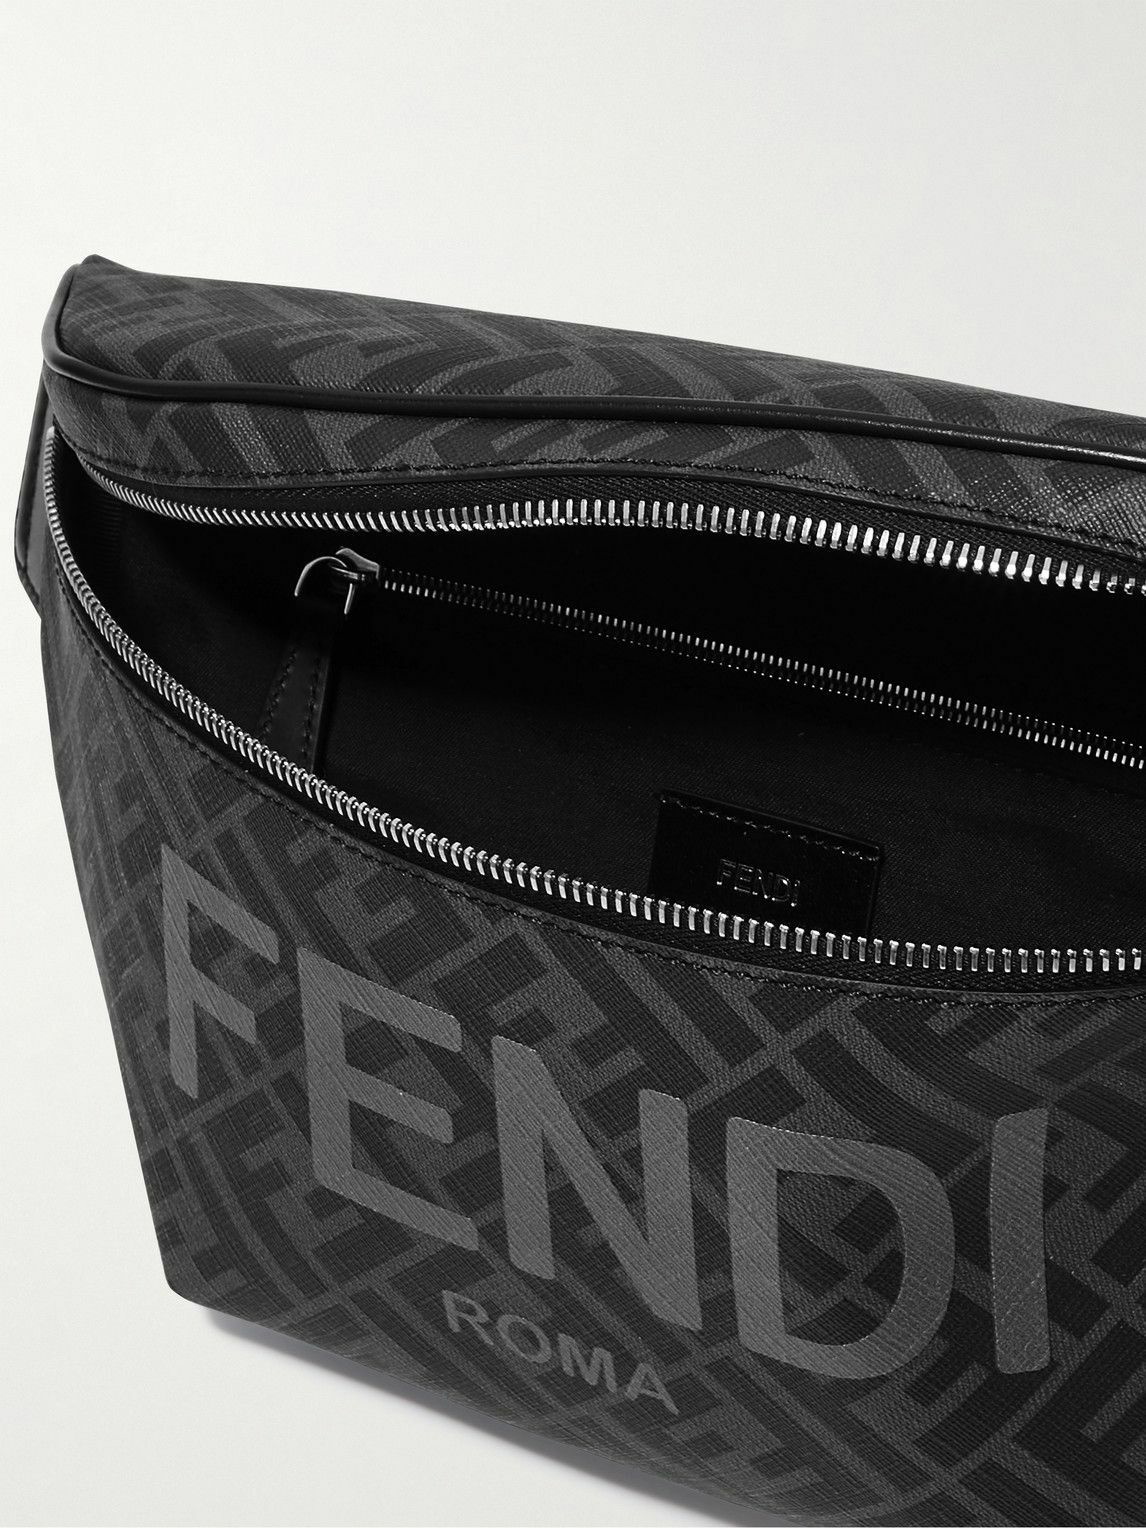 Fendi Men's Face Clutch Bag